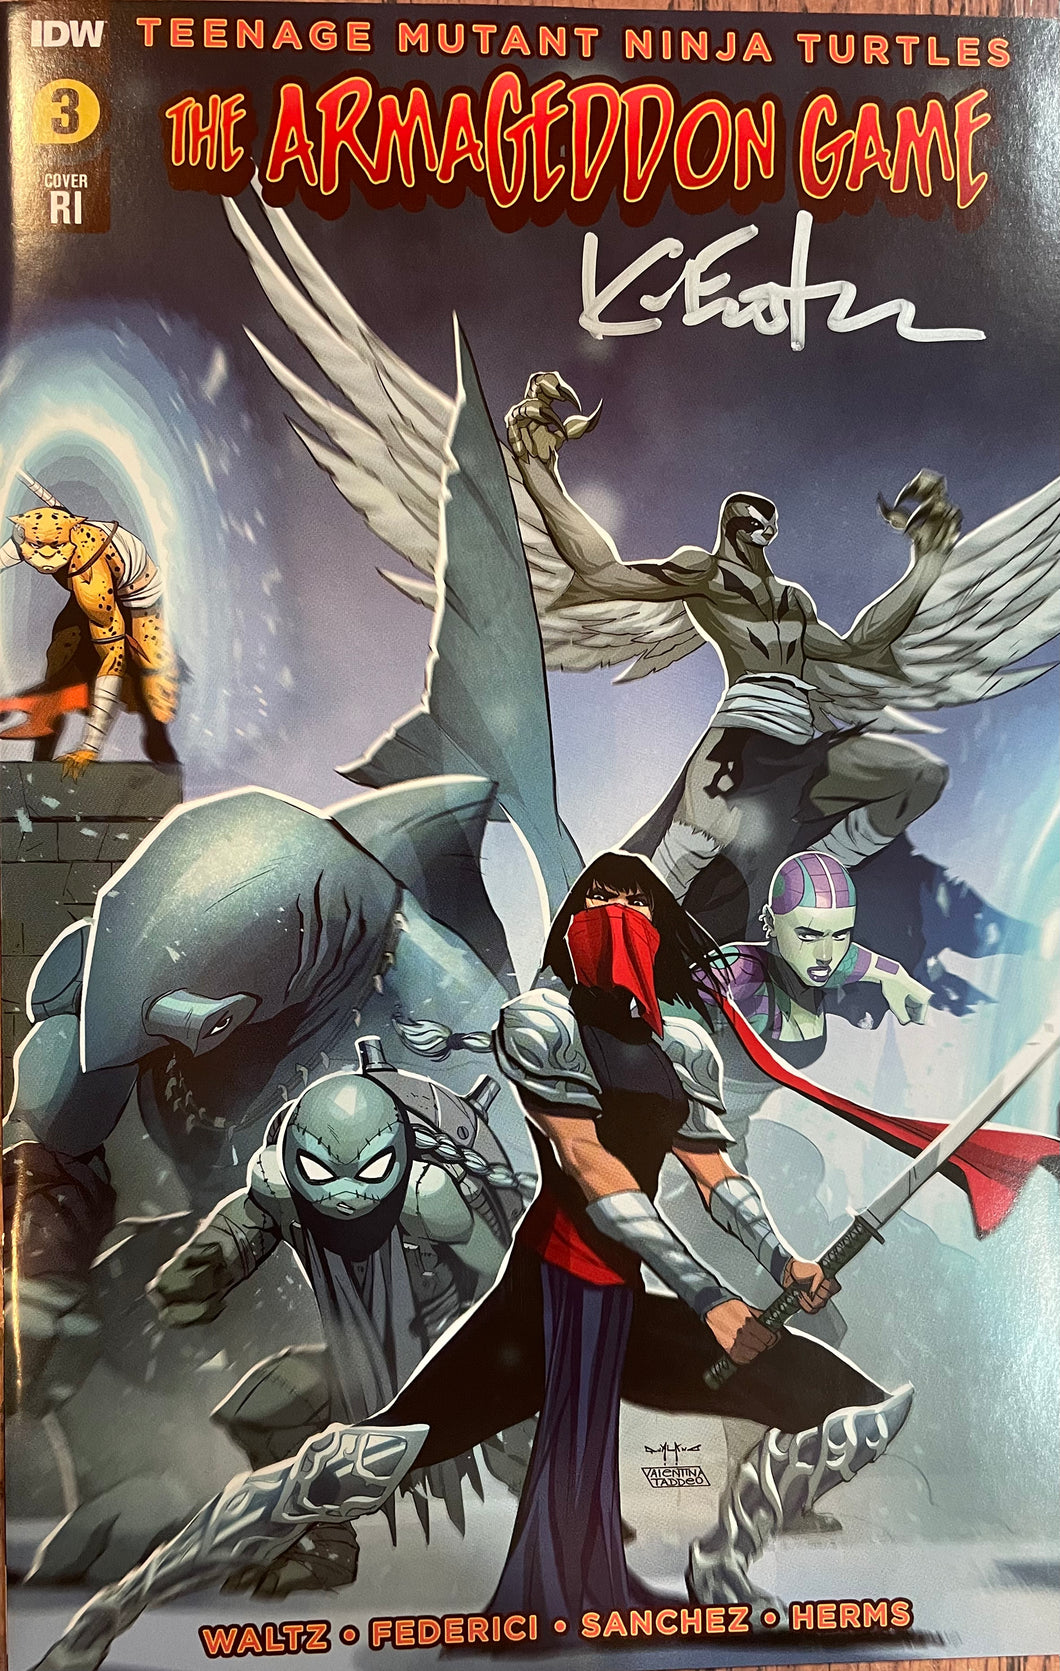 Teenage Mutant Ninja Turtles : The Armageddon Game #3 Retailer Incentive 1:10 signed by Kevin Eastman